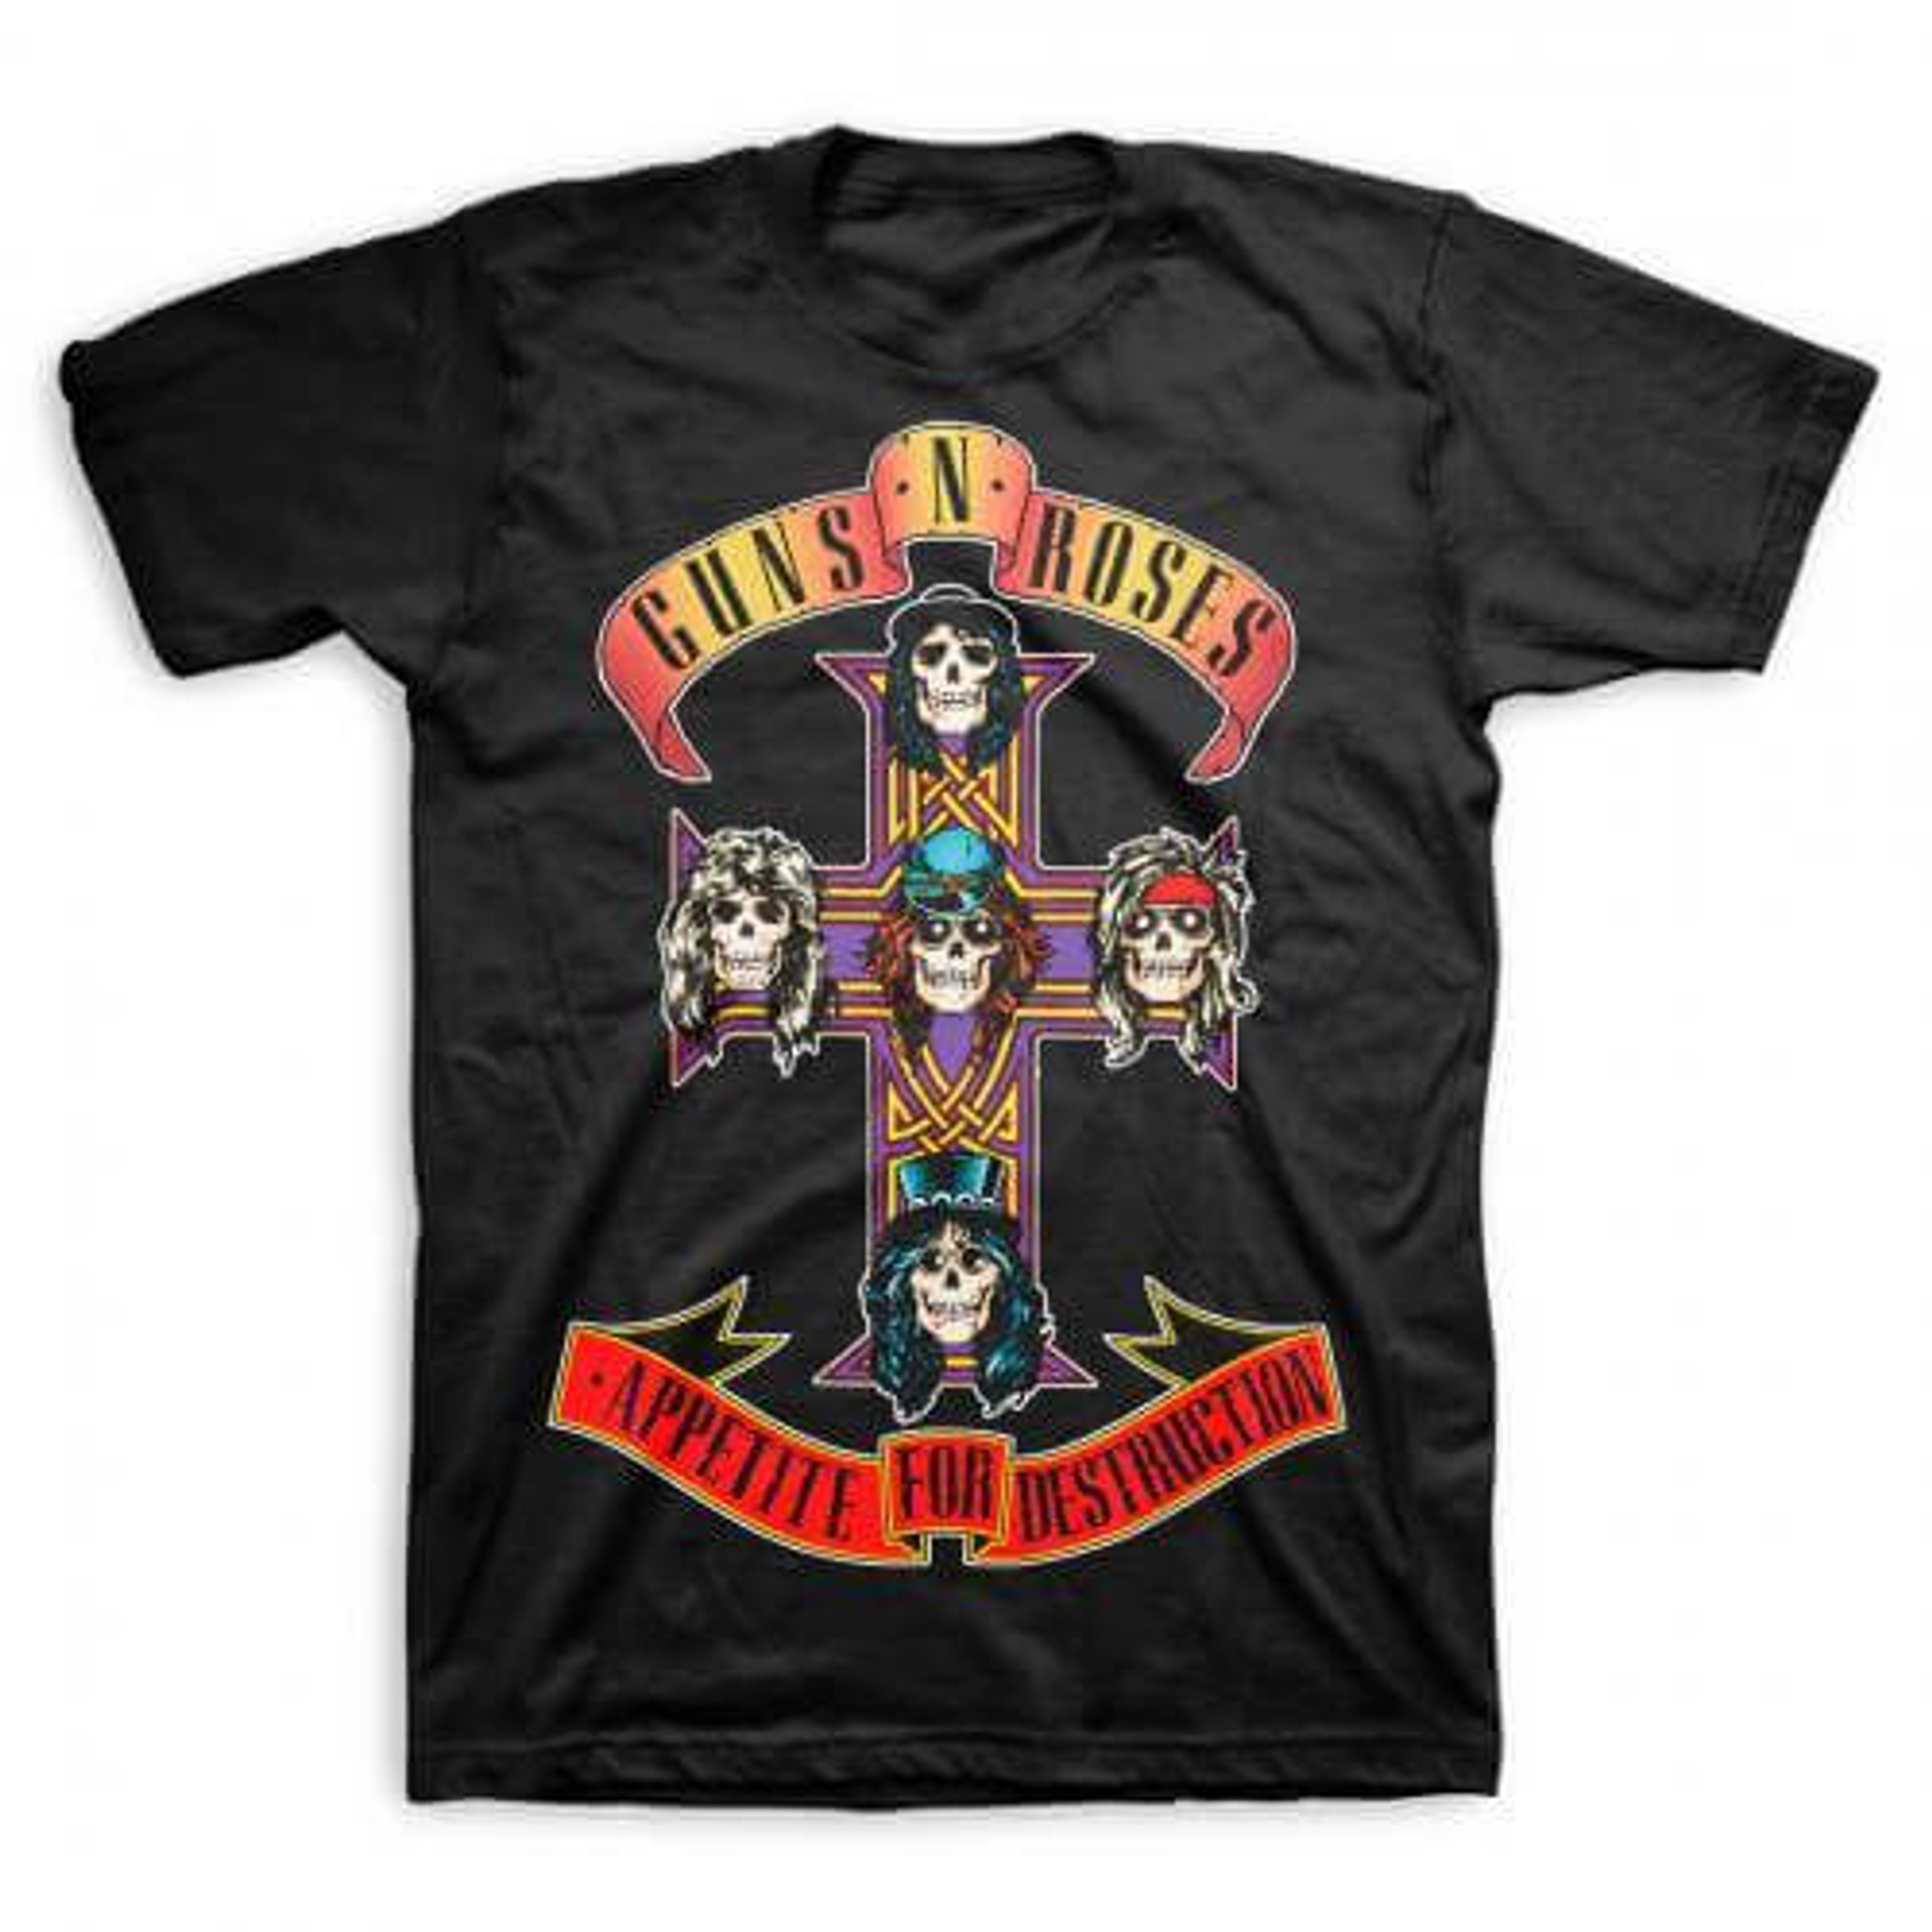 Guns N Roses Shirts | Rock Music Tee Shirts